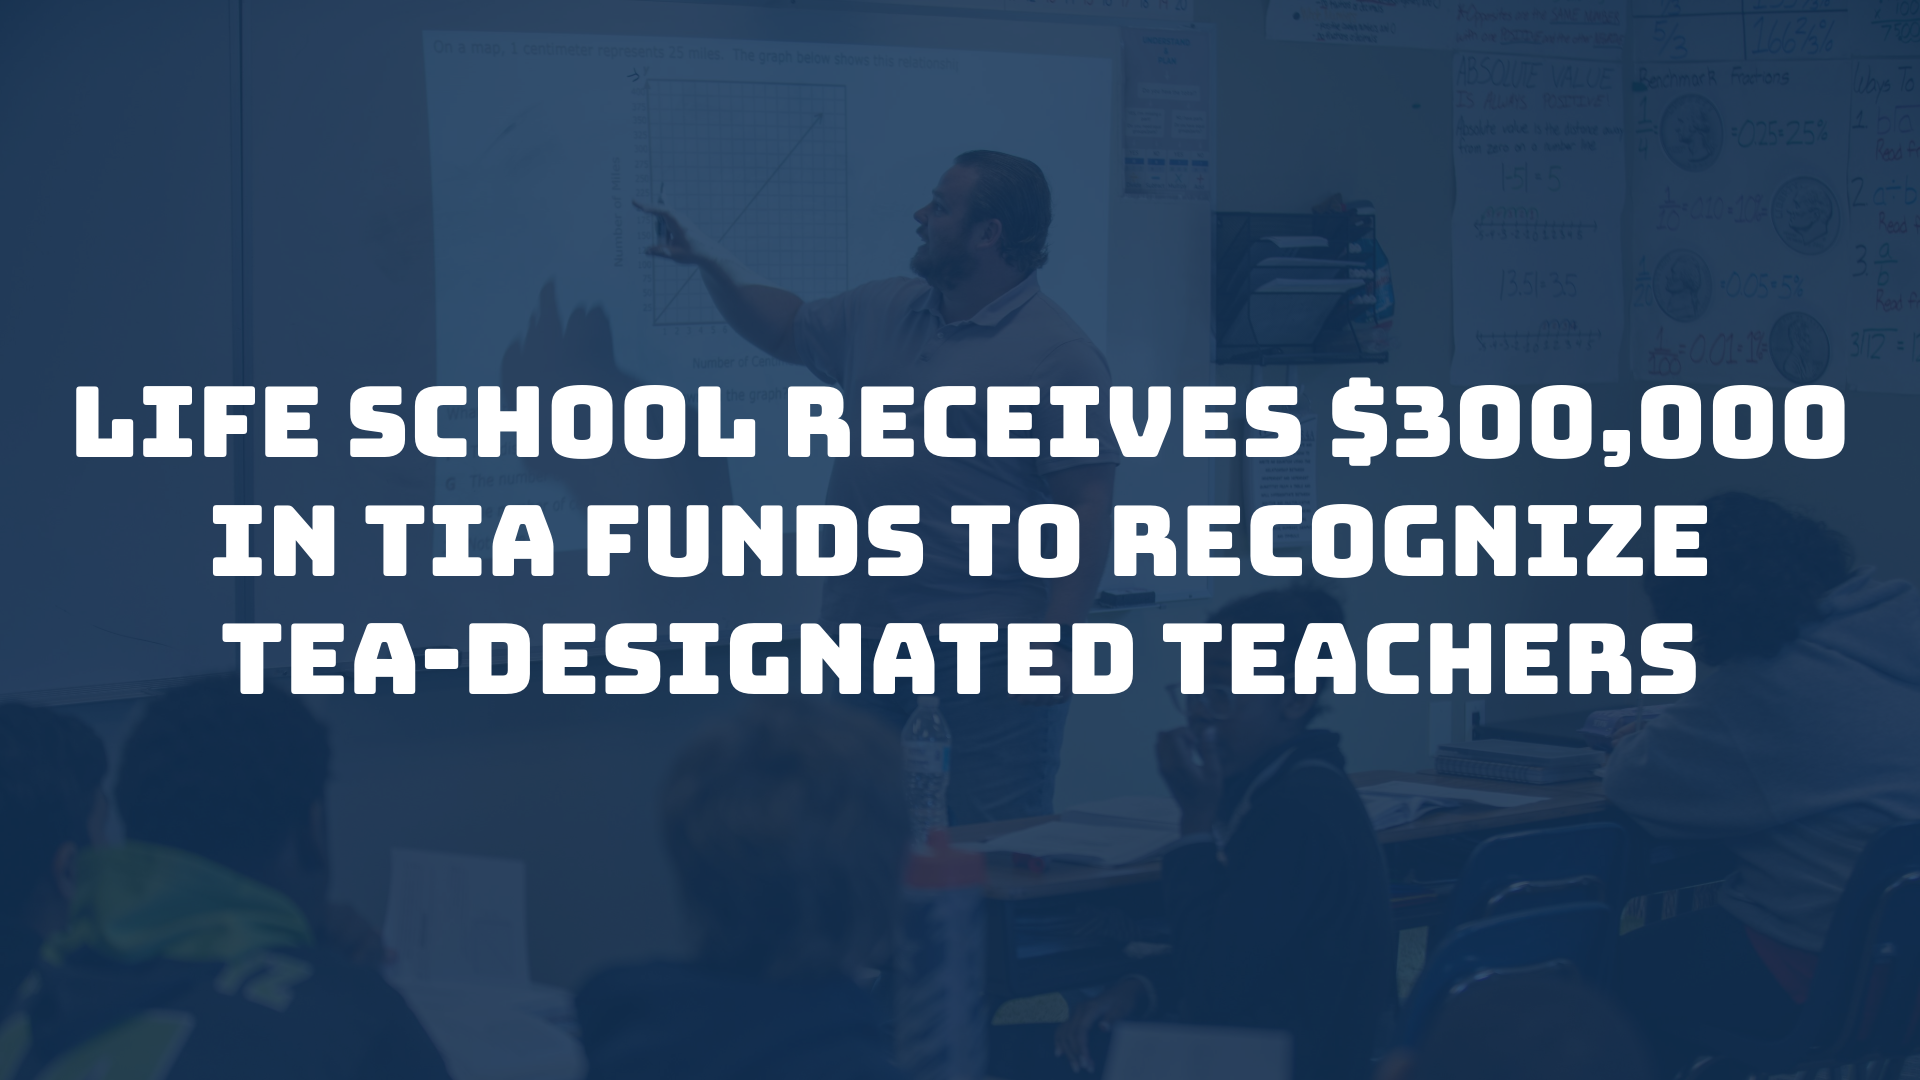 Life School Receives $300,000 in TIA Funds to Recognize TEA-designated Teachers